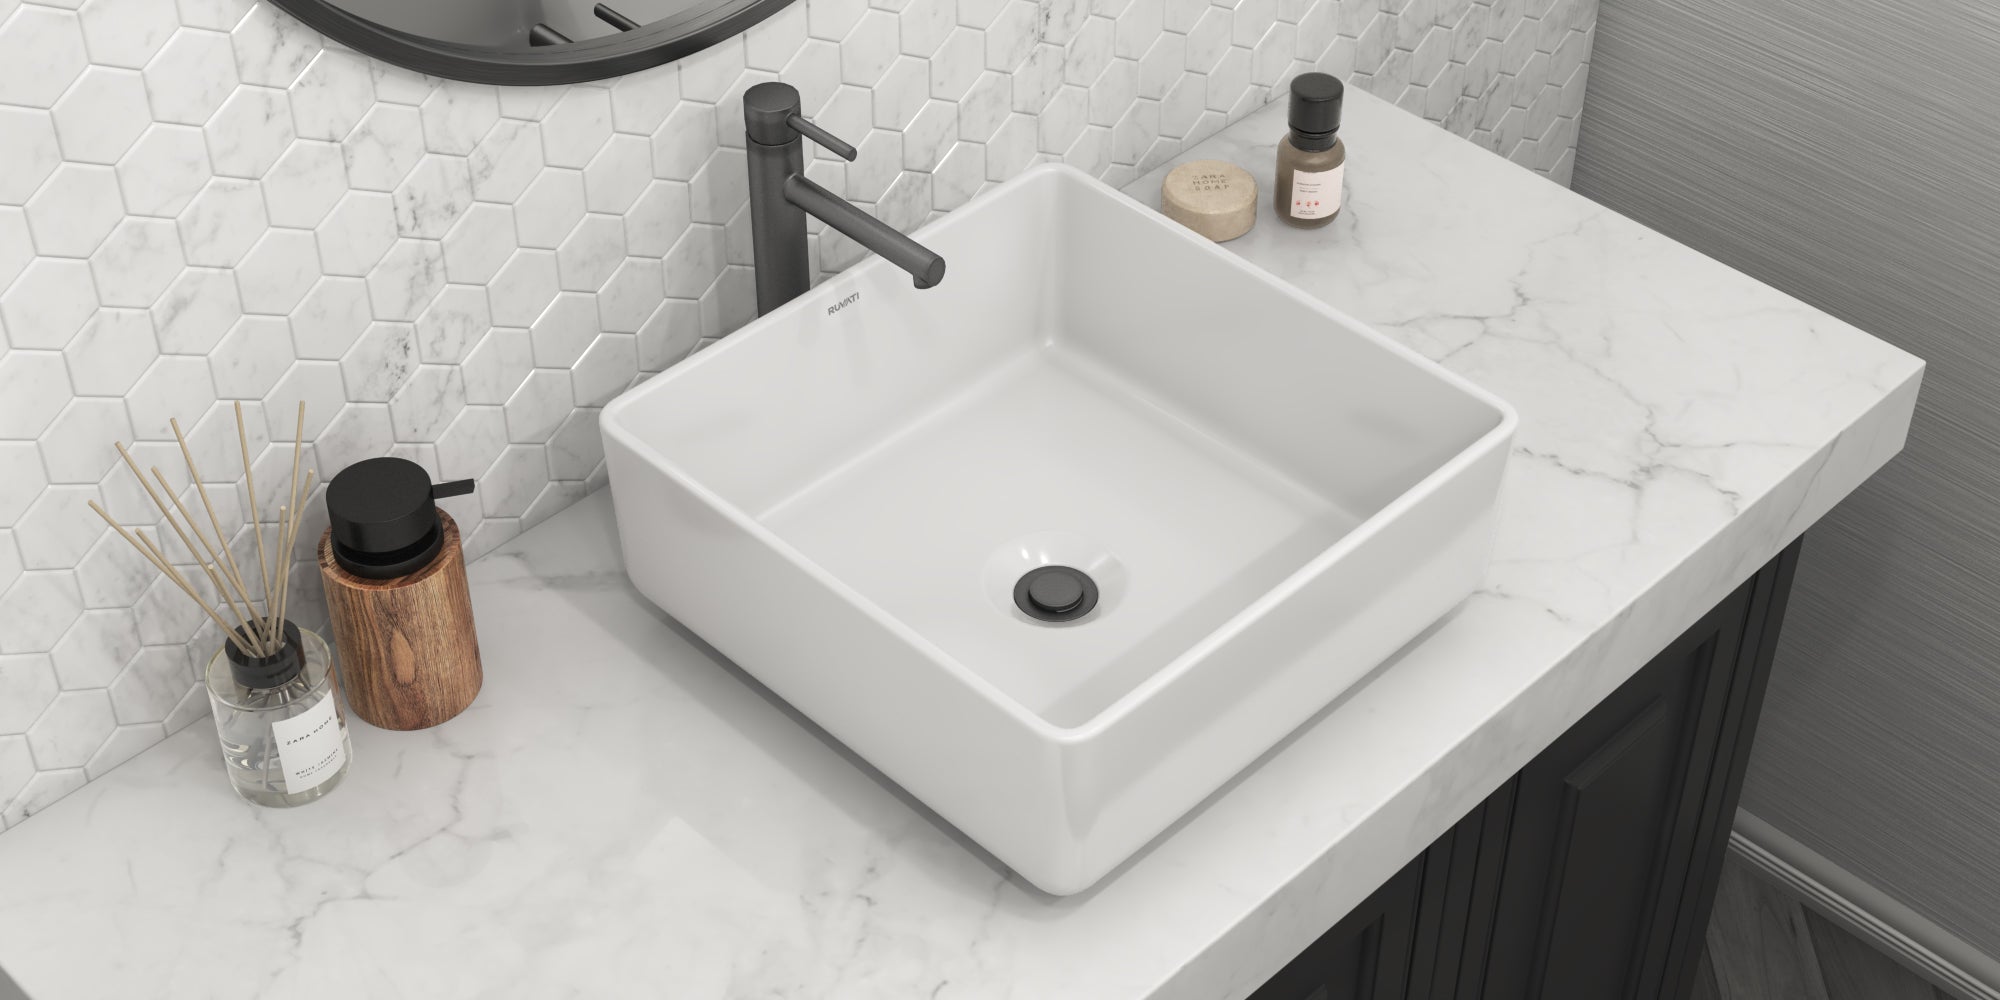 15 x 15 inch Bathroom Vessel Sink White Square Above Counter Porcelain Ceramic